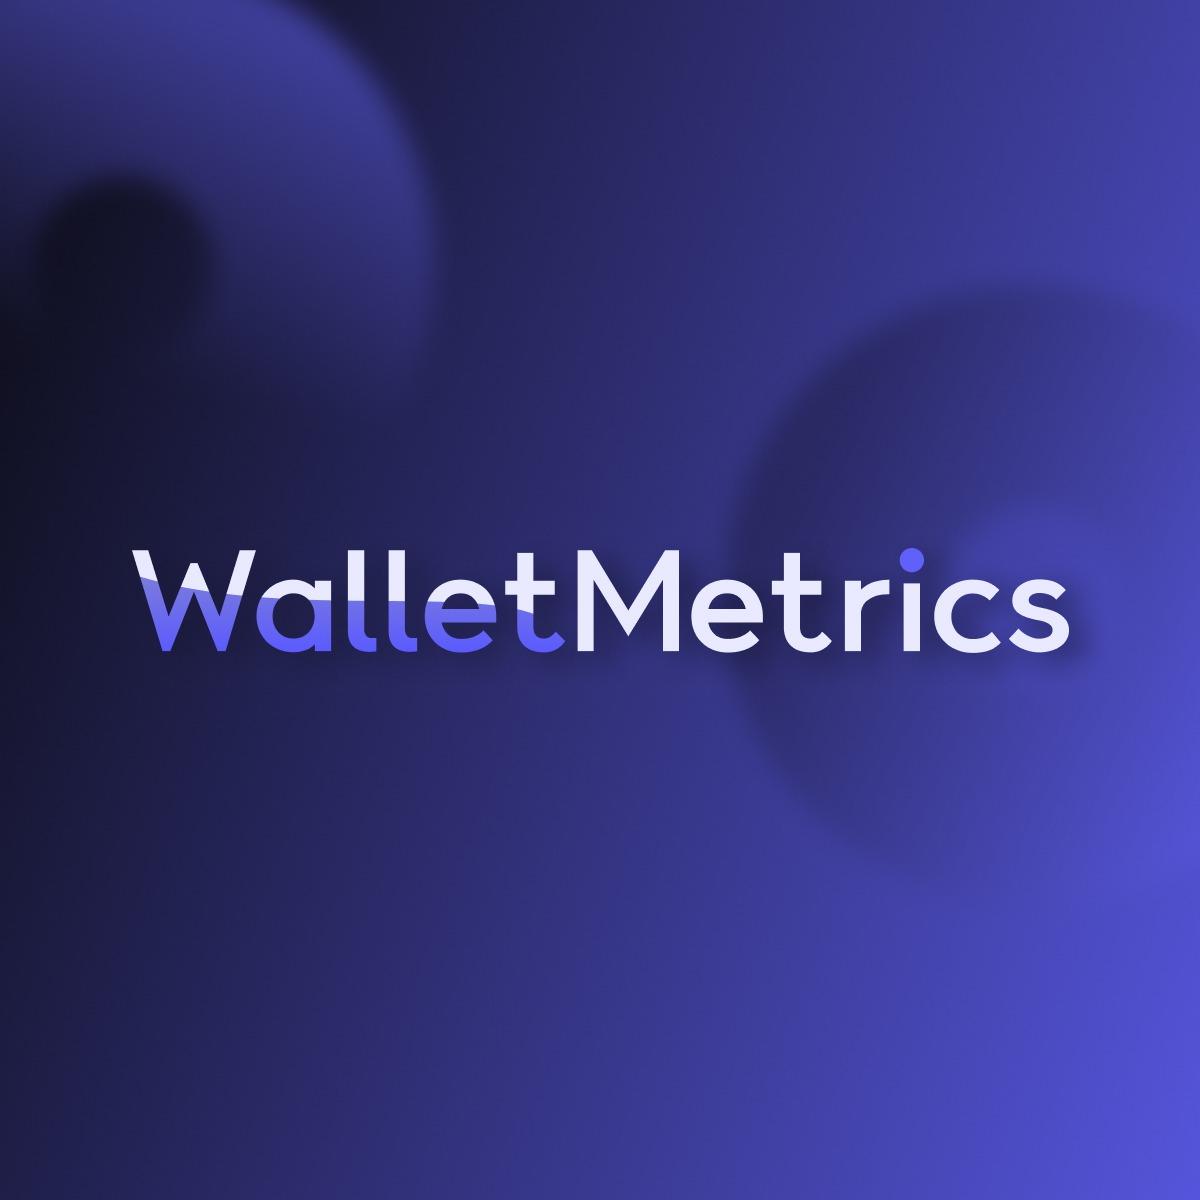 WalletMetrics : Google Analytics for DApps